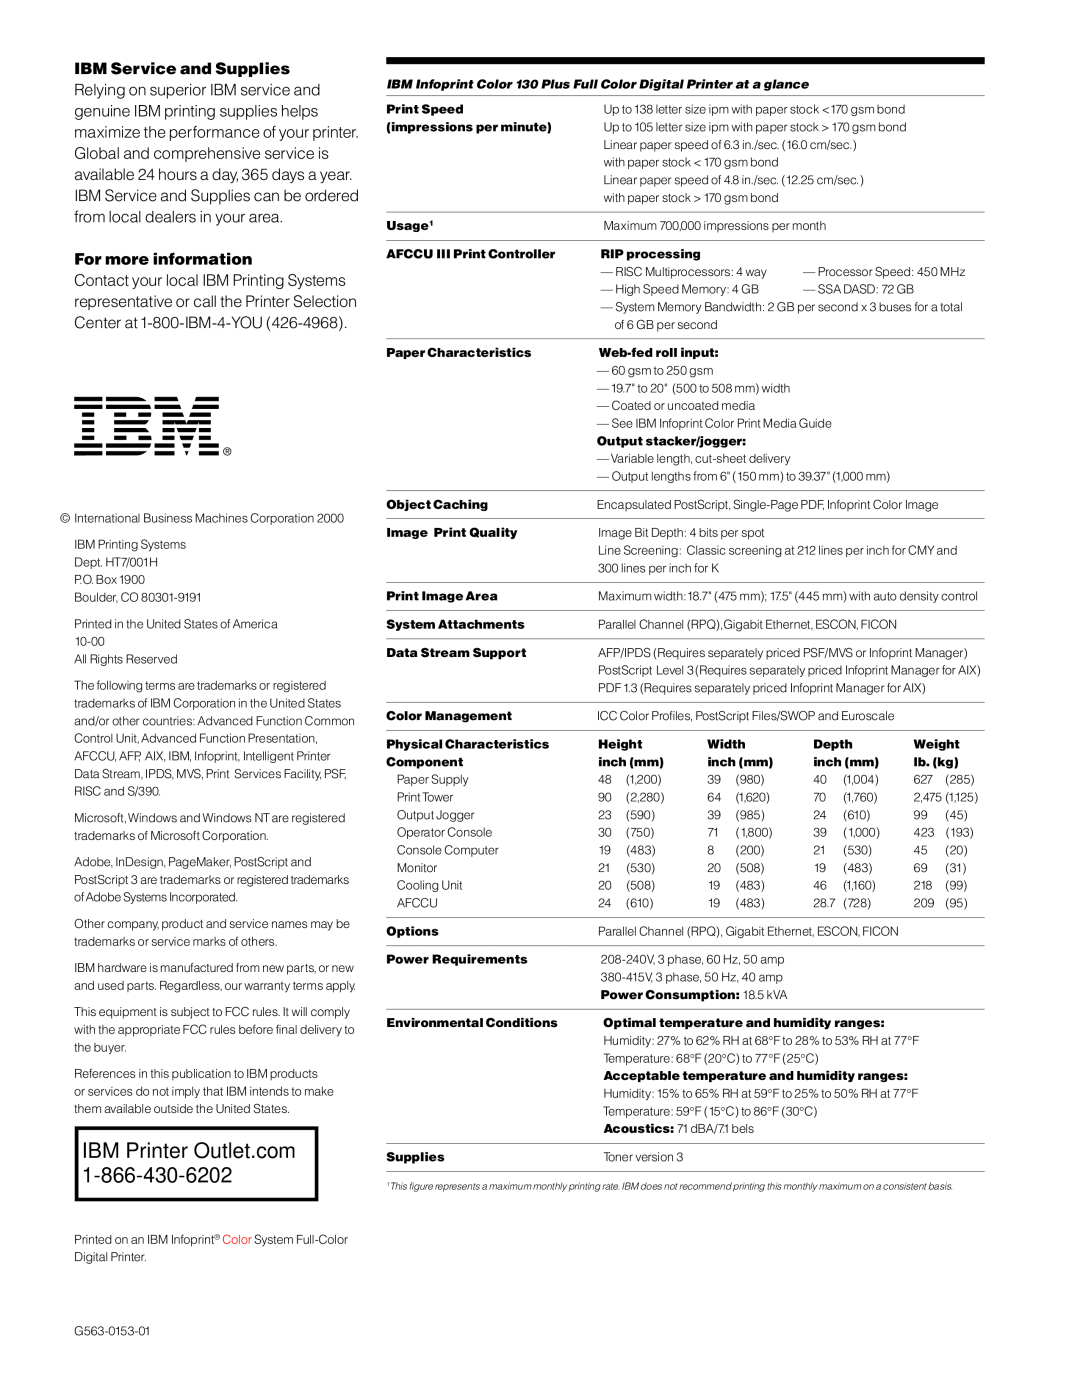 IBM 130 Plus manual IBM Service and Supplies, For more information, IBM Printer Outlet.com 